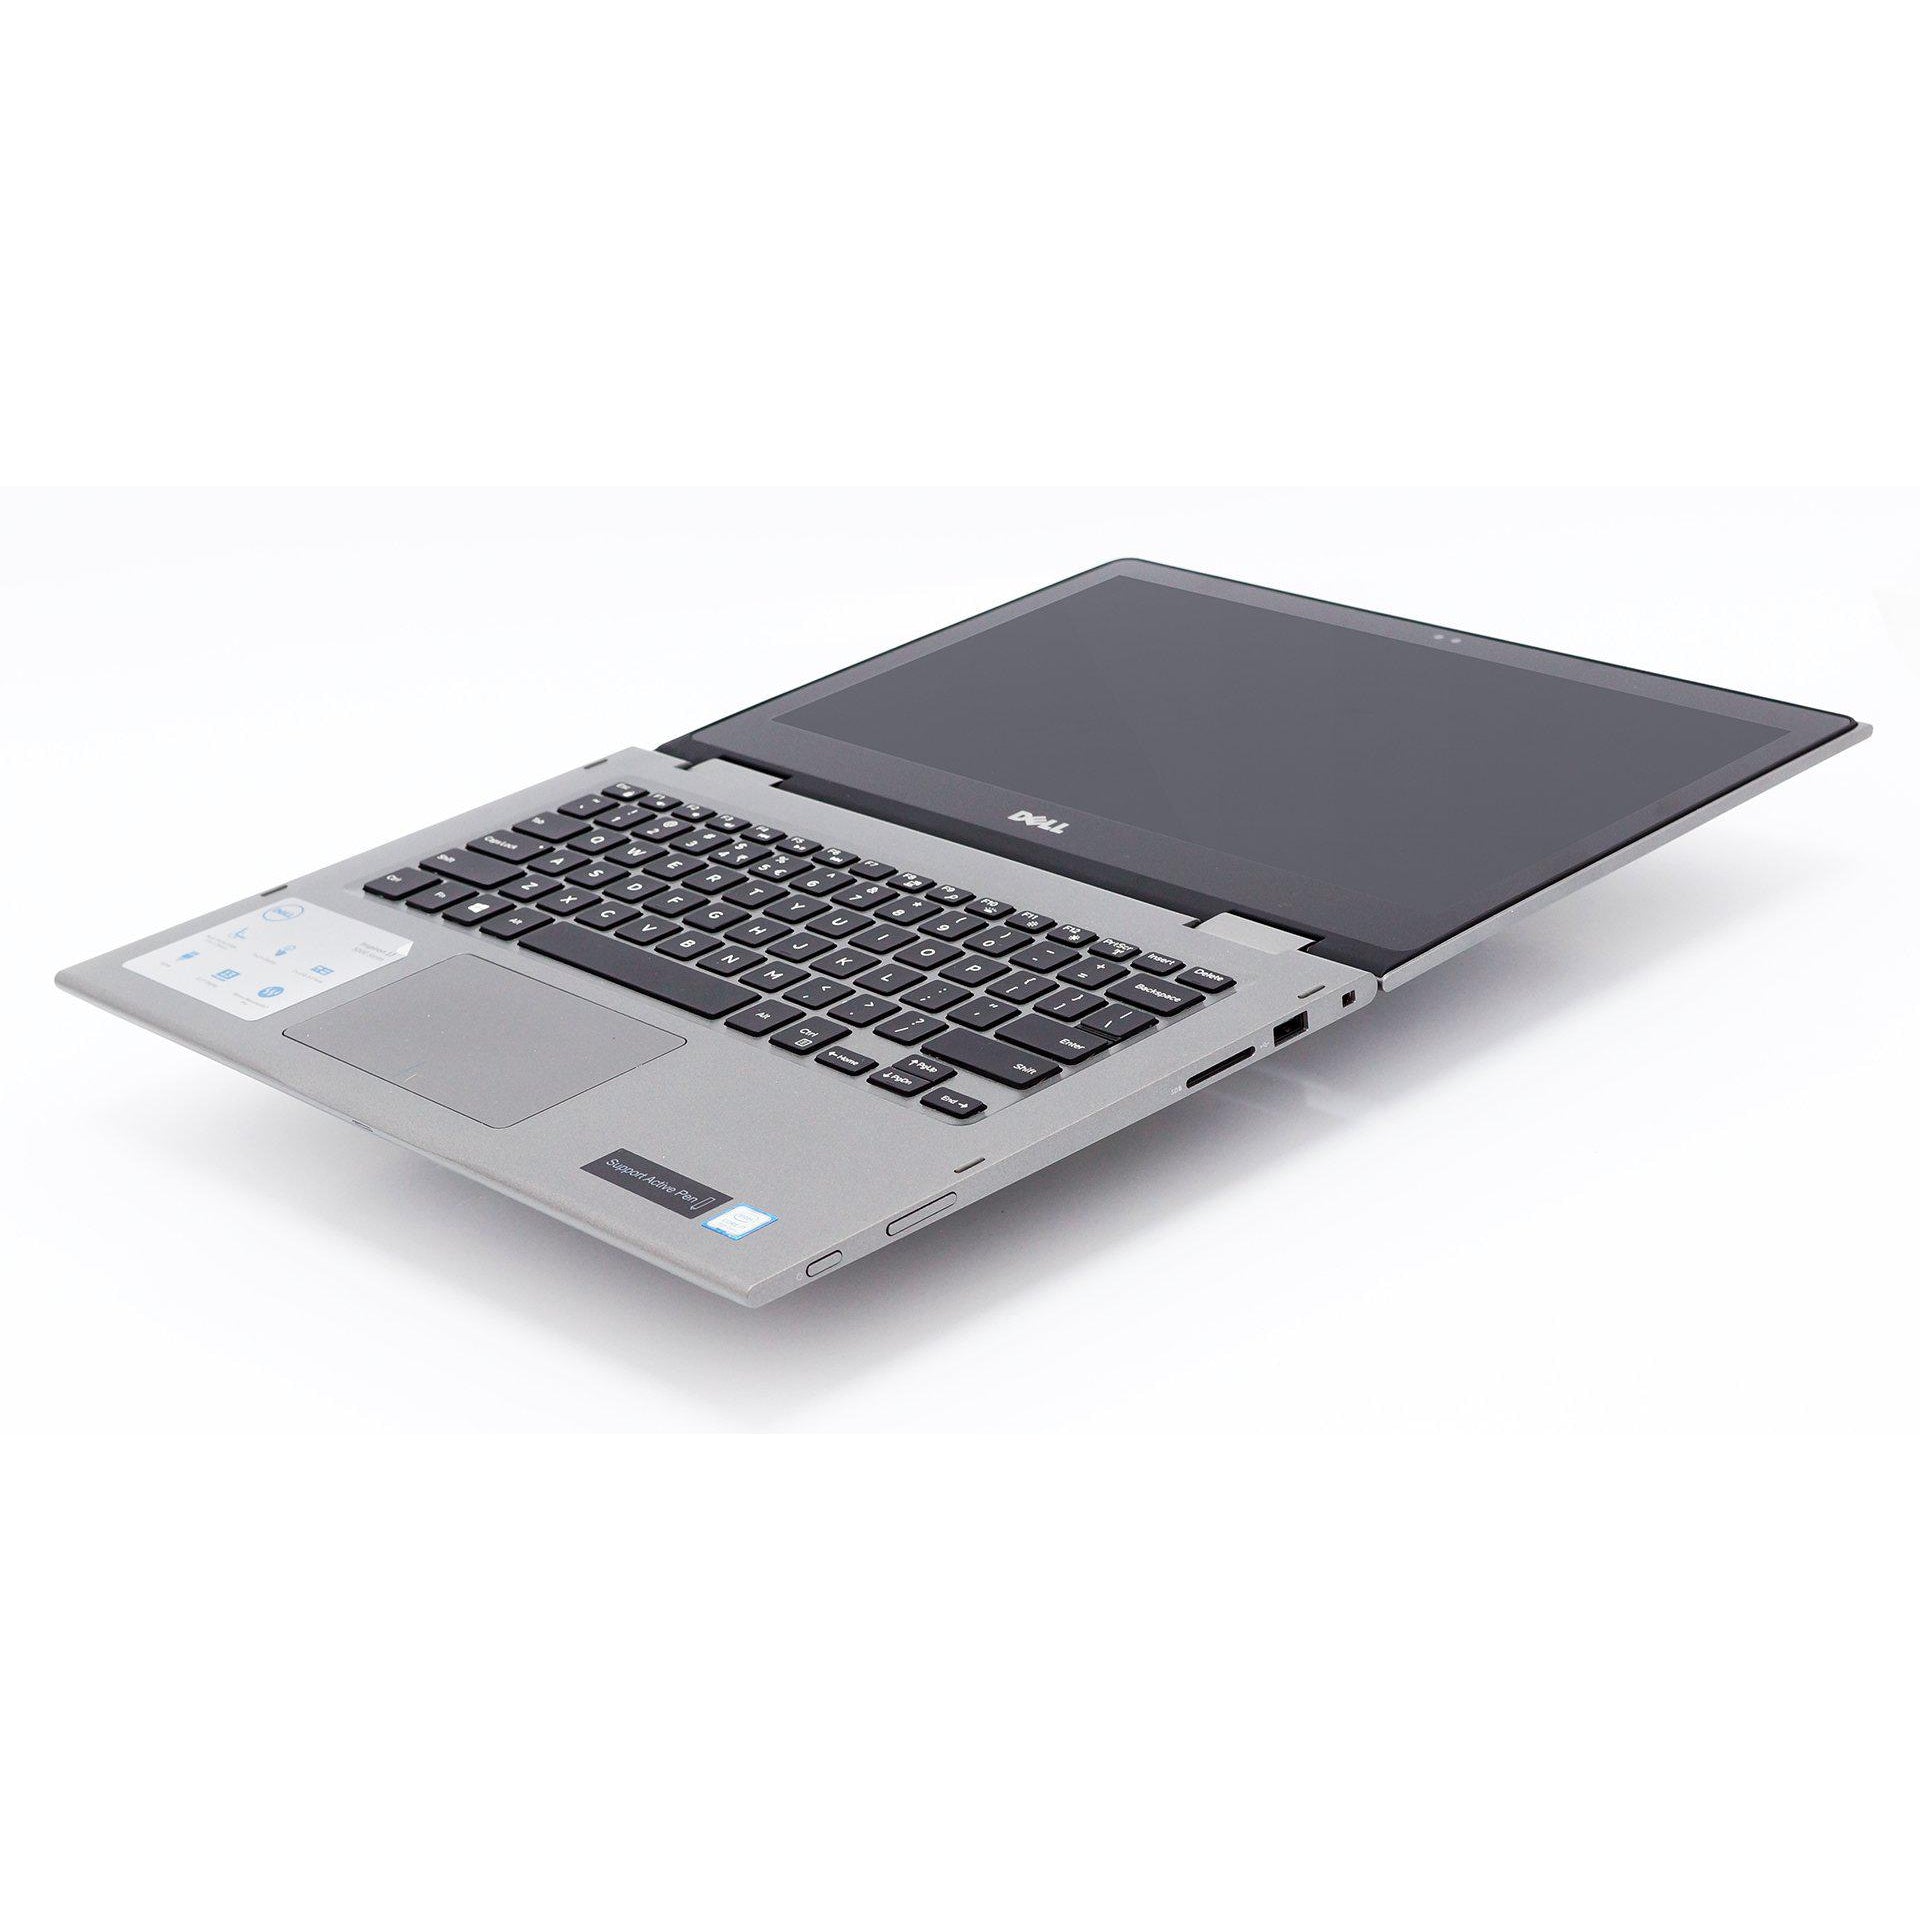 Dell Inspiron 13 5379, 13.3" Laptop, Intel Core i5, 8GB RAM, 256GB SSD, Grey - Refurbished Good